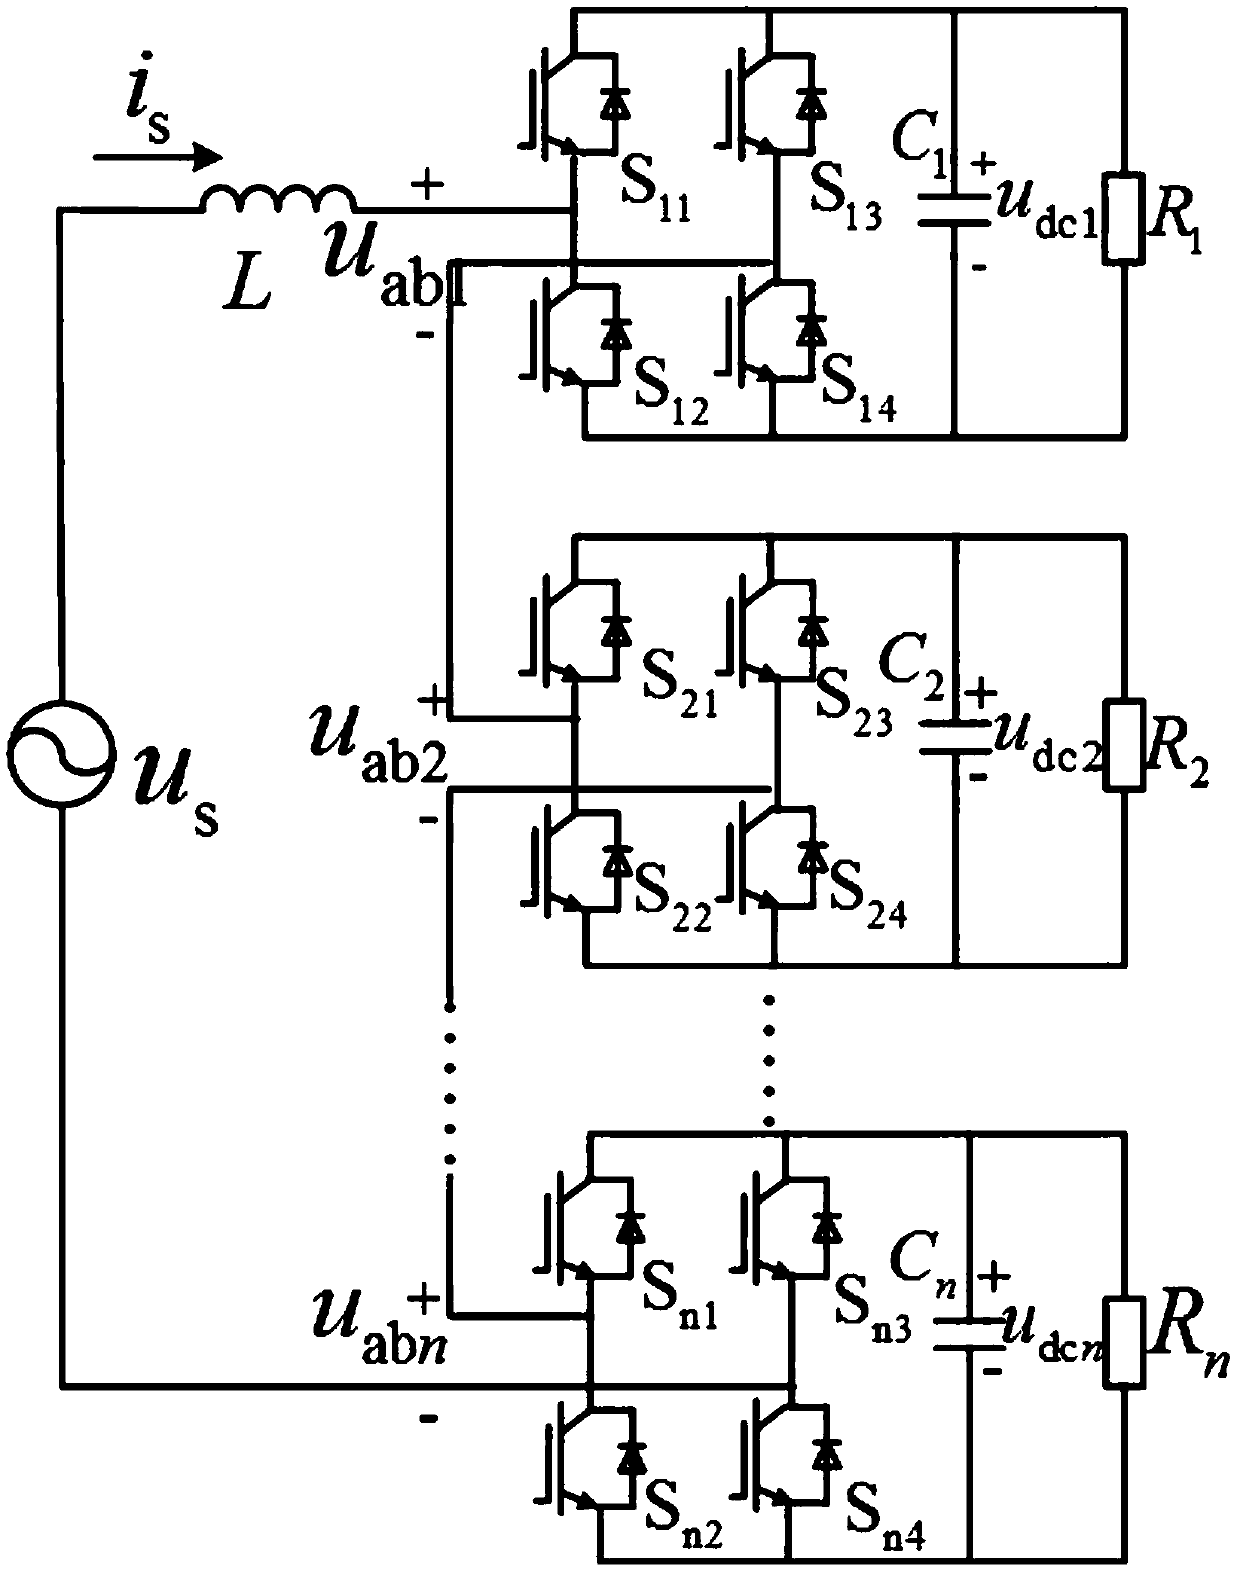 Capacitor voltage balance control method for cascaded H-bridge rectifier